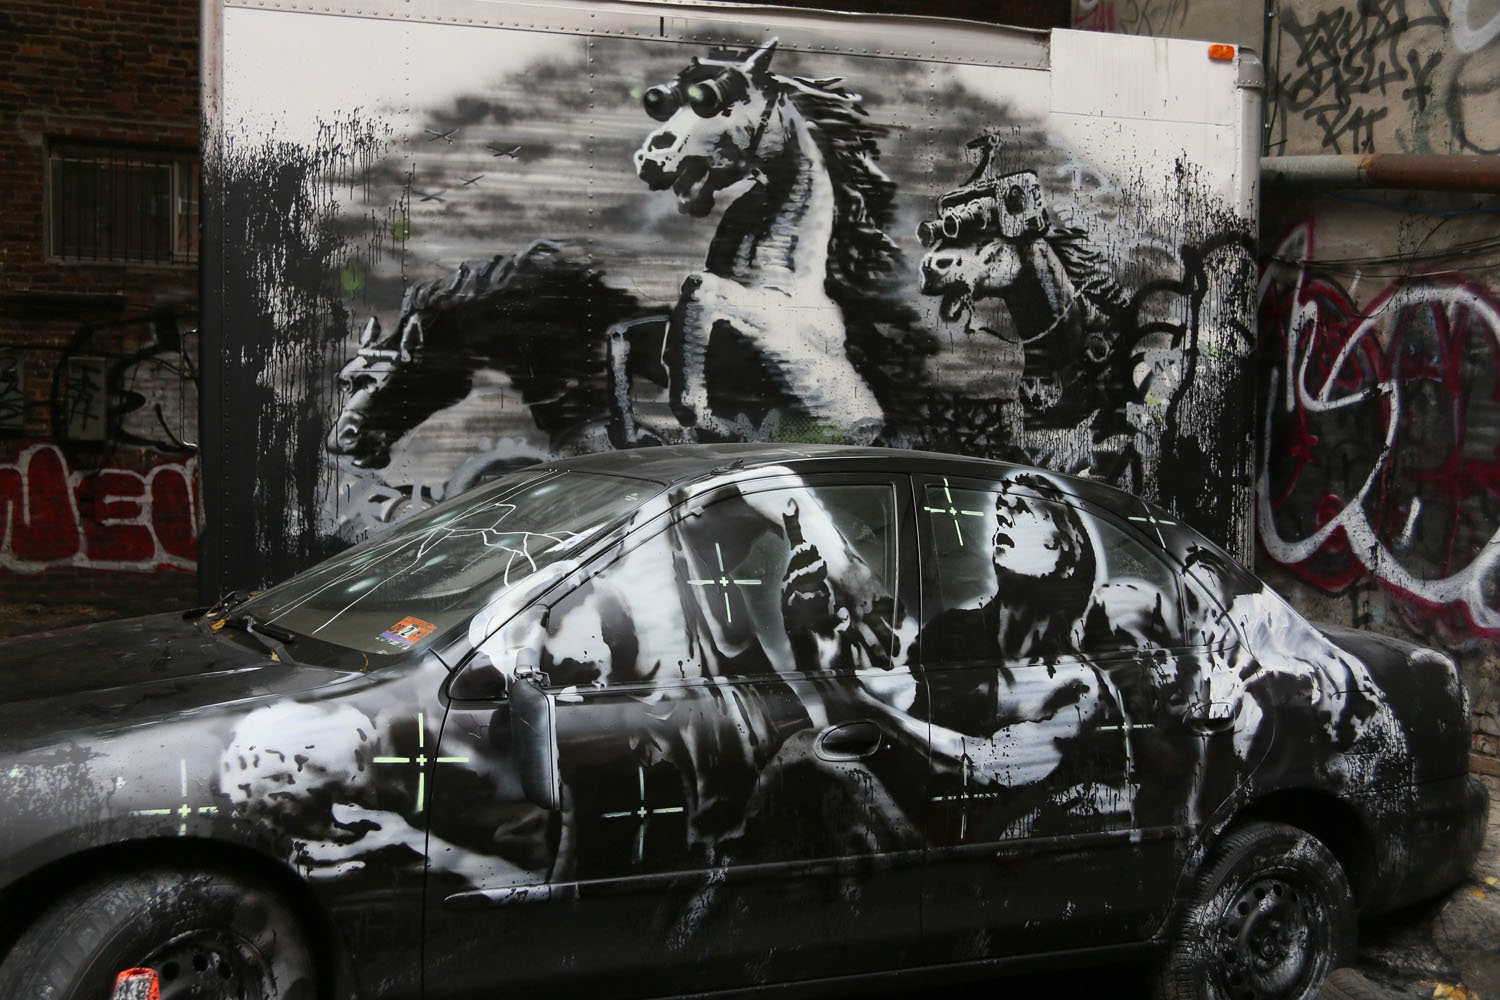 Graffiti artist Banksy takes residency on streets of New York